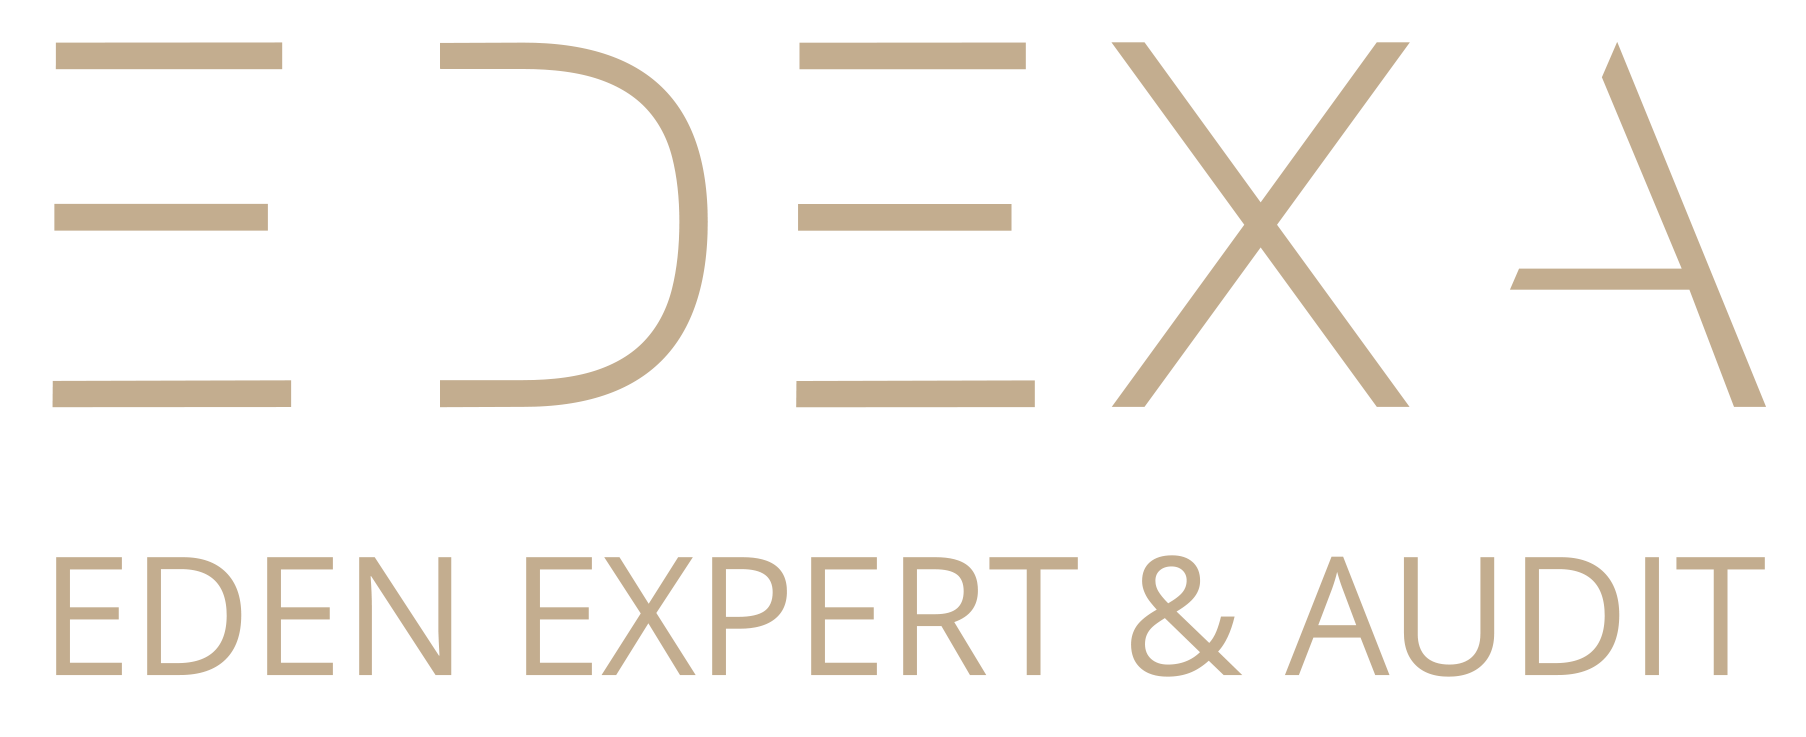 EDEXA - Eden Expert & Audit